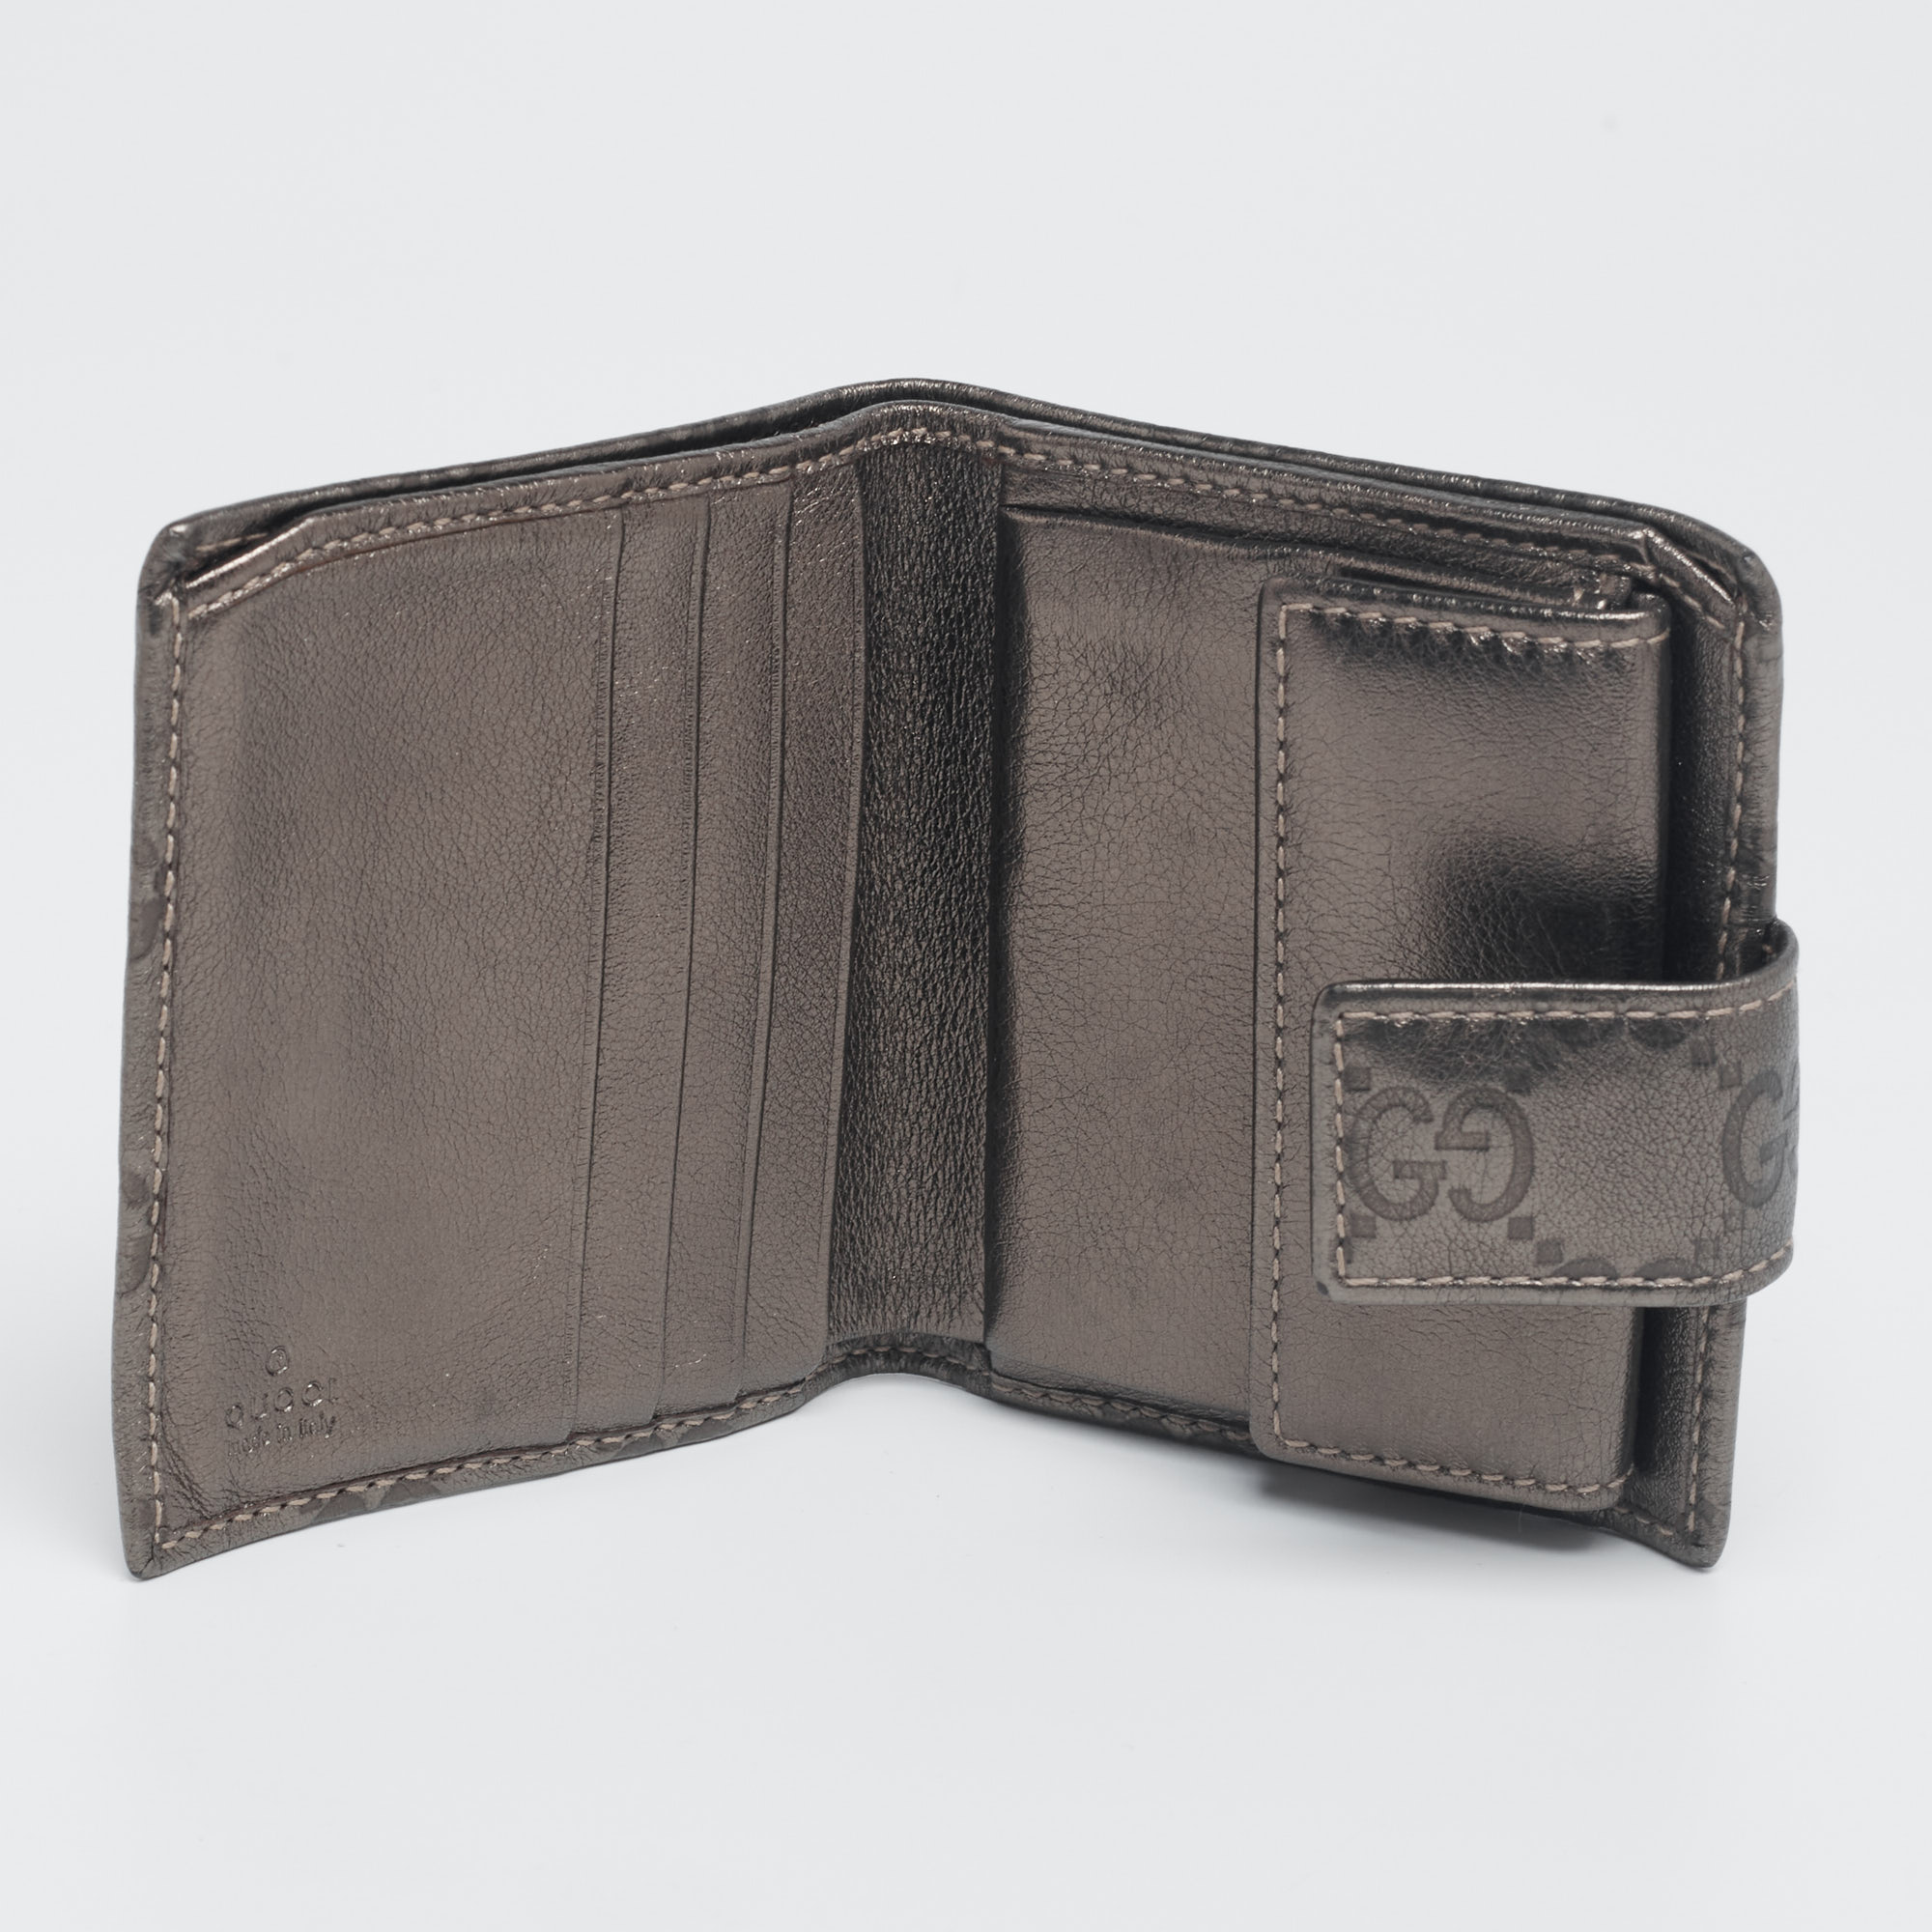 

Gucci Metallic Gun Metal Guccissima Leather Compact Wallet